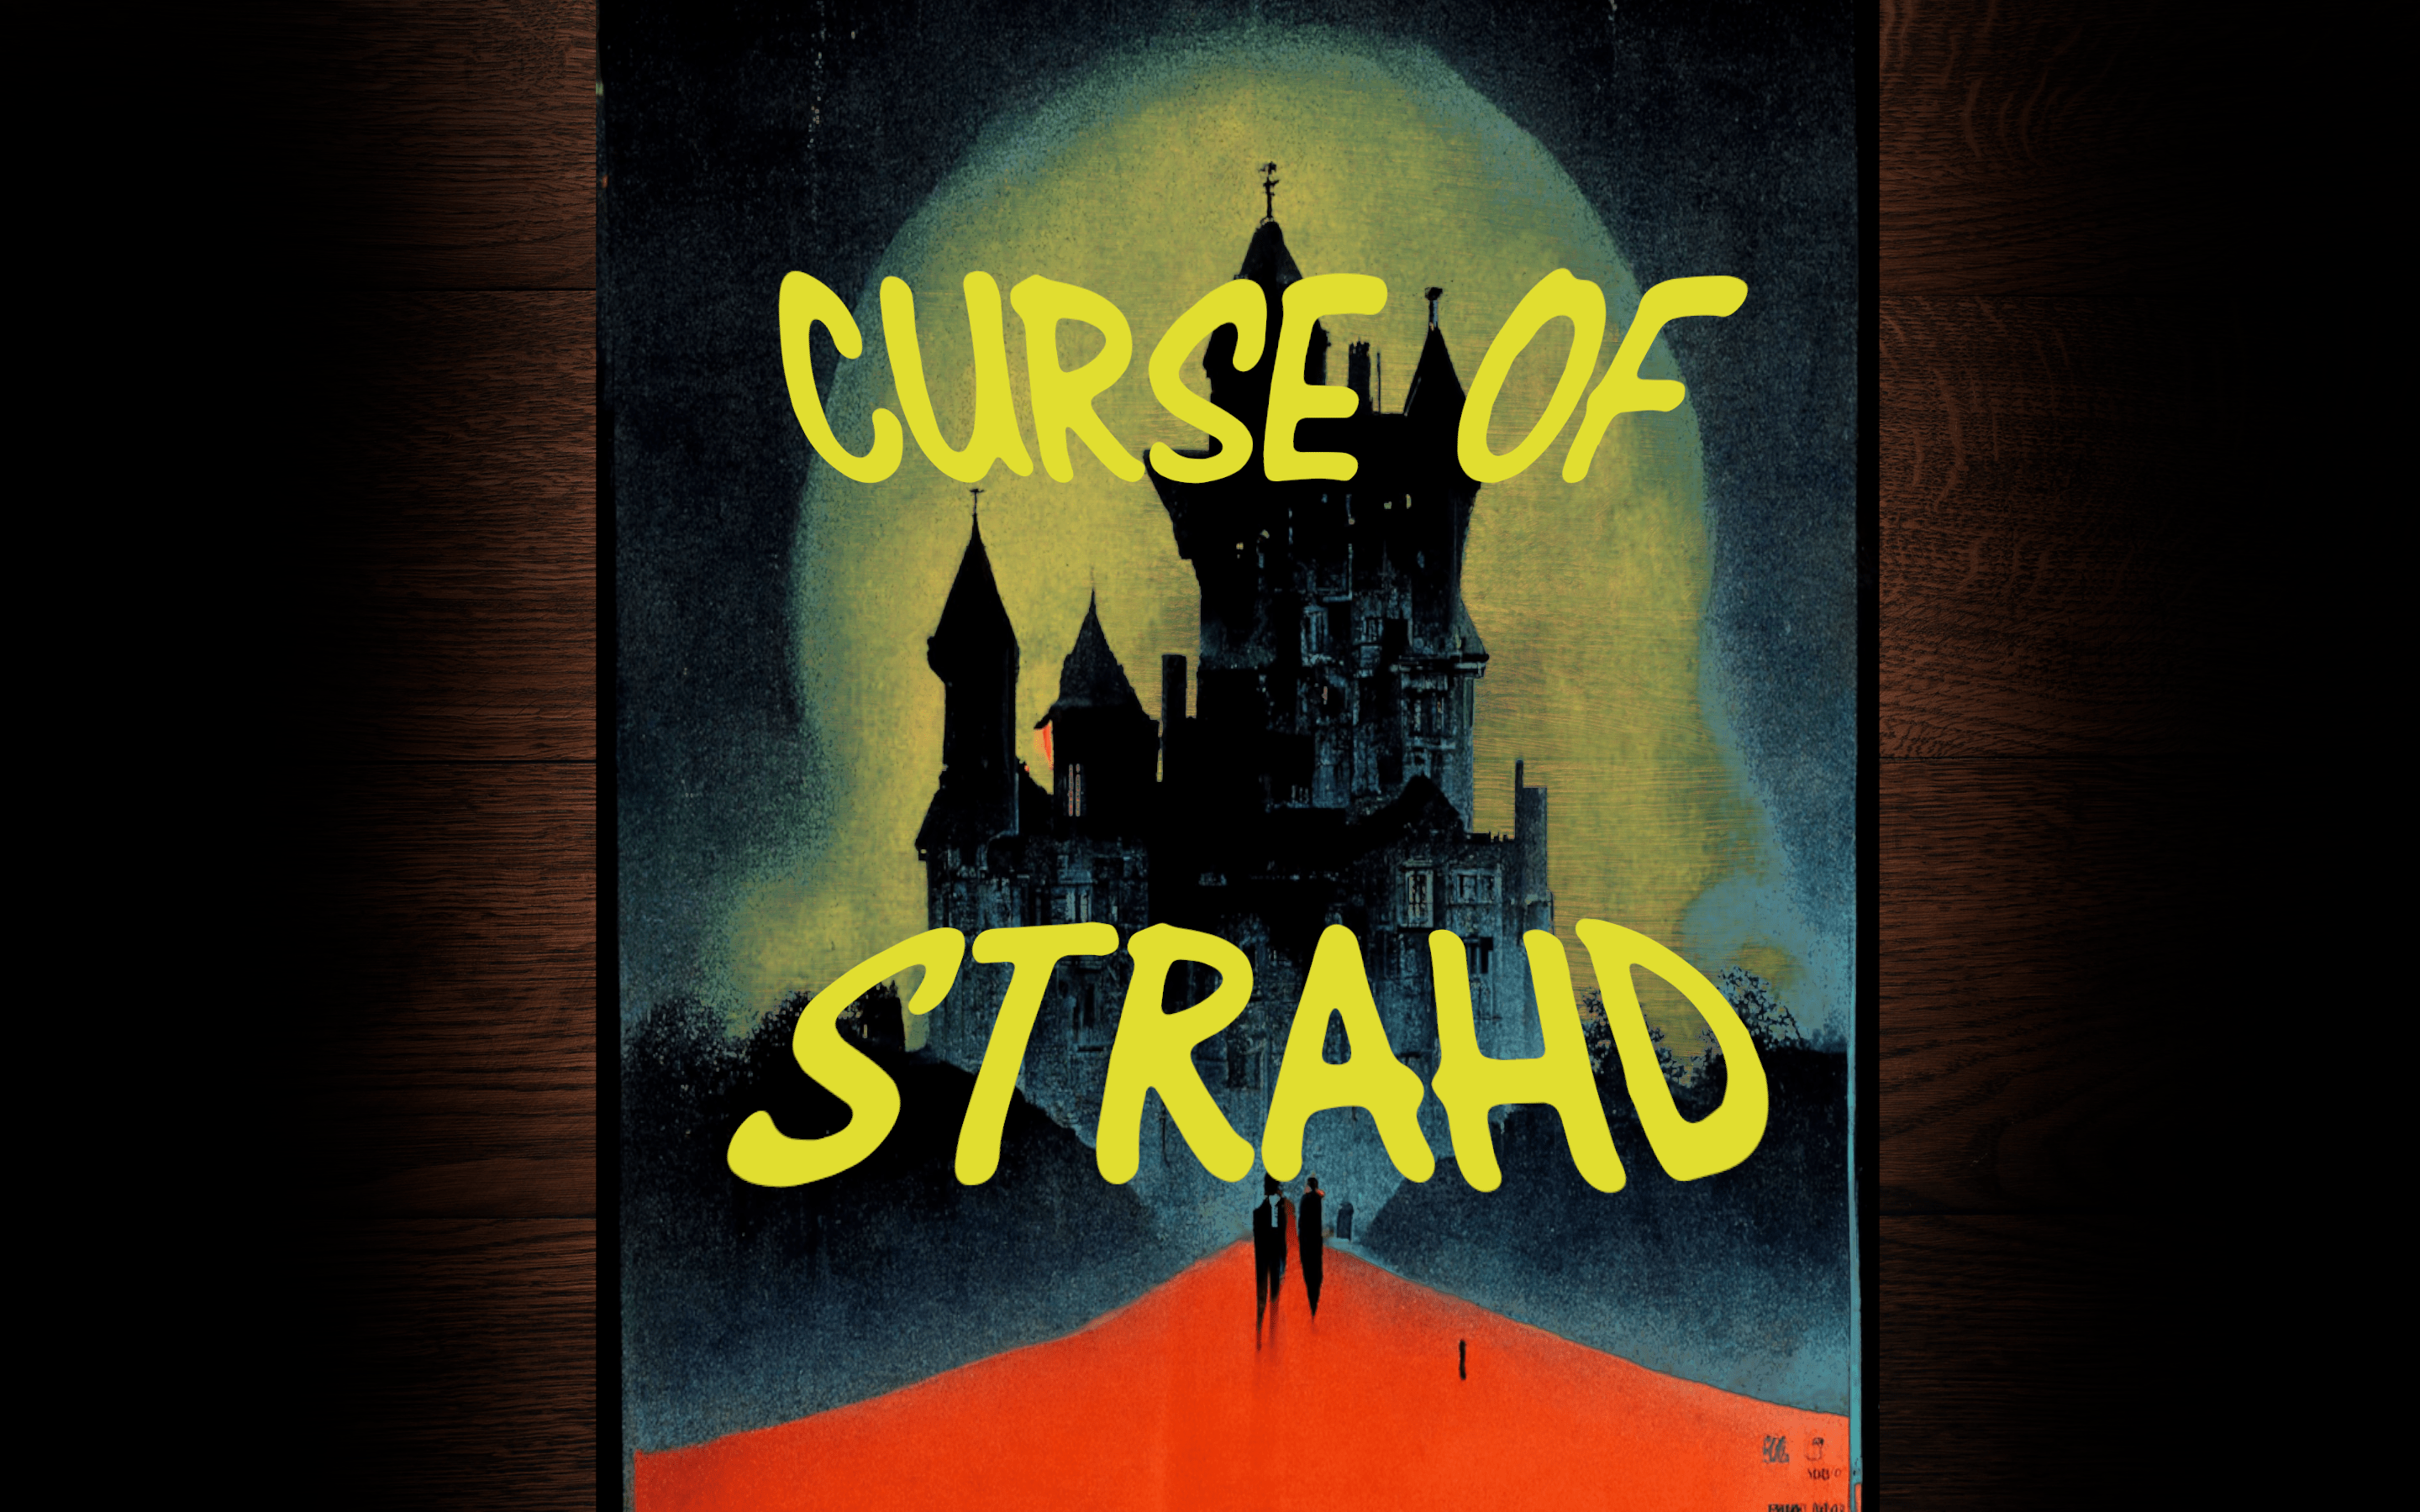 Curse of Strahd - The land of Barovia